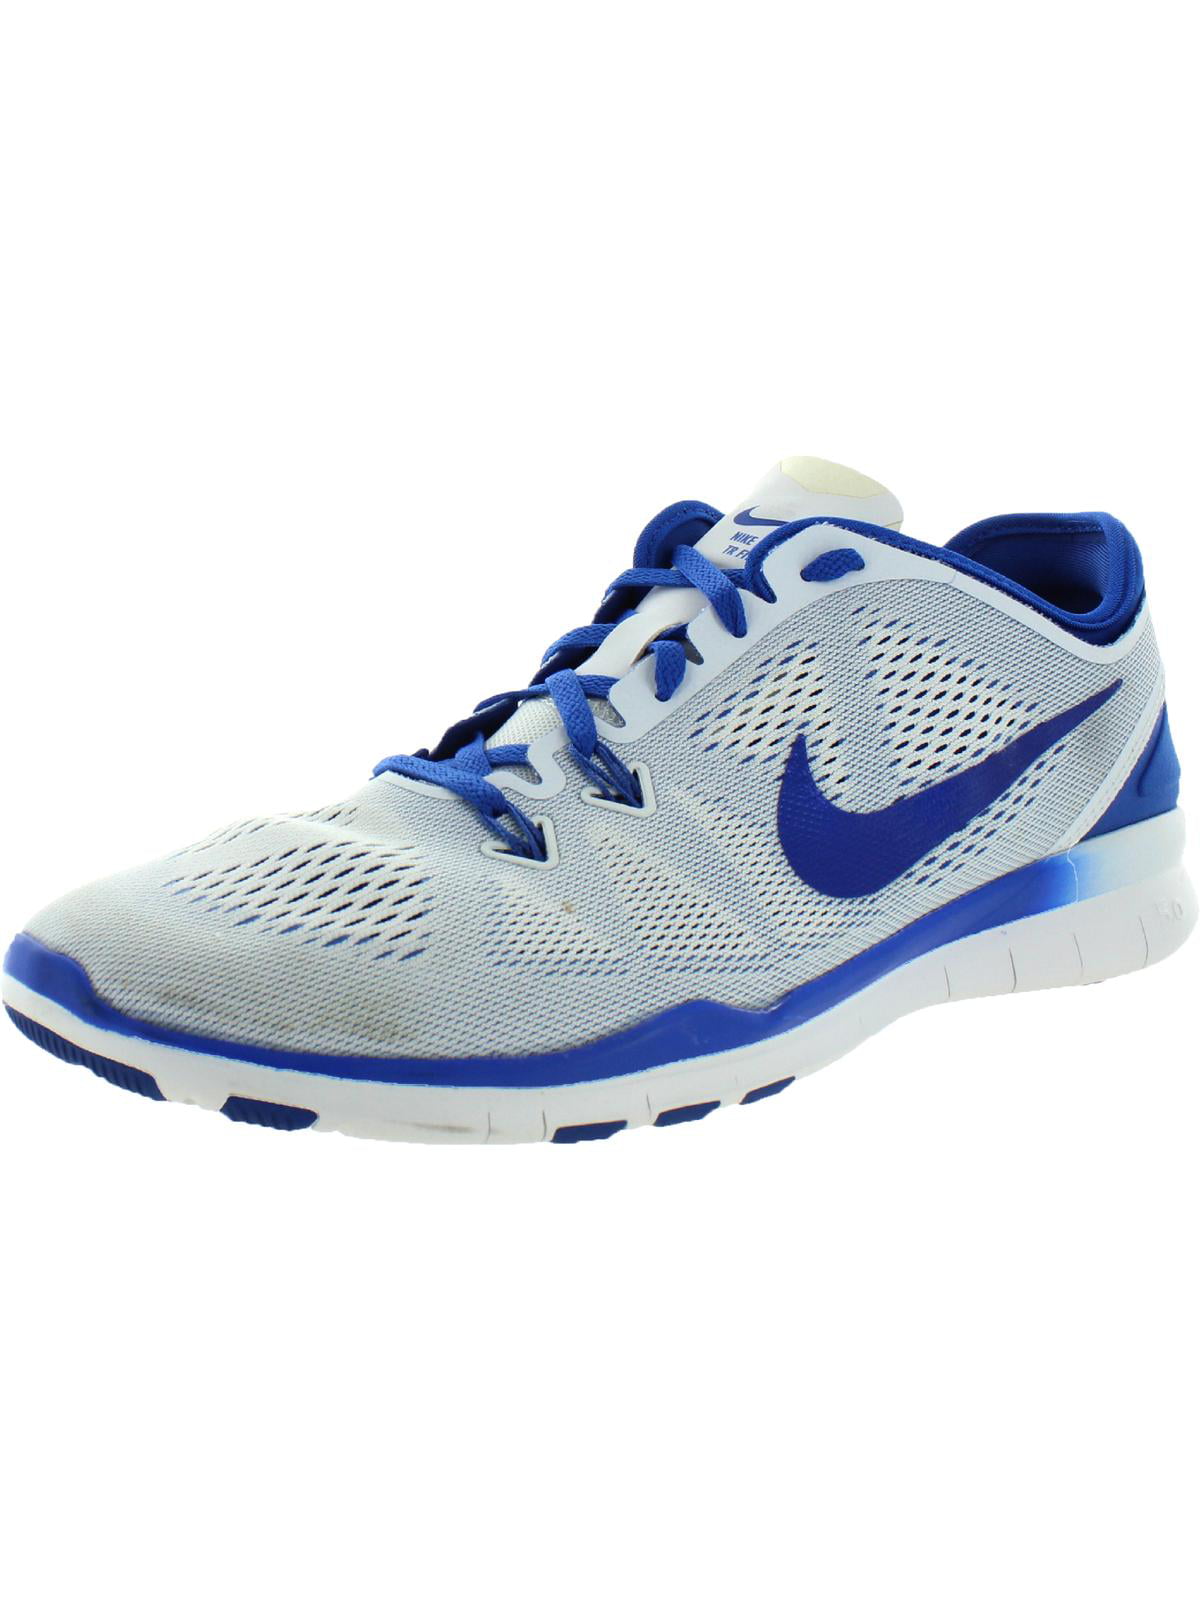 Nike - Nike Womens Free 5.0 Tr Fit 5 Running, Cross Training Shoes Blue ...